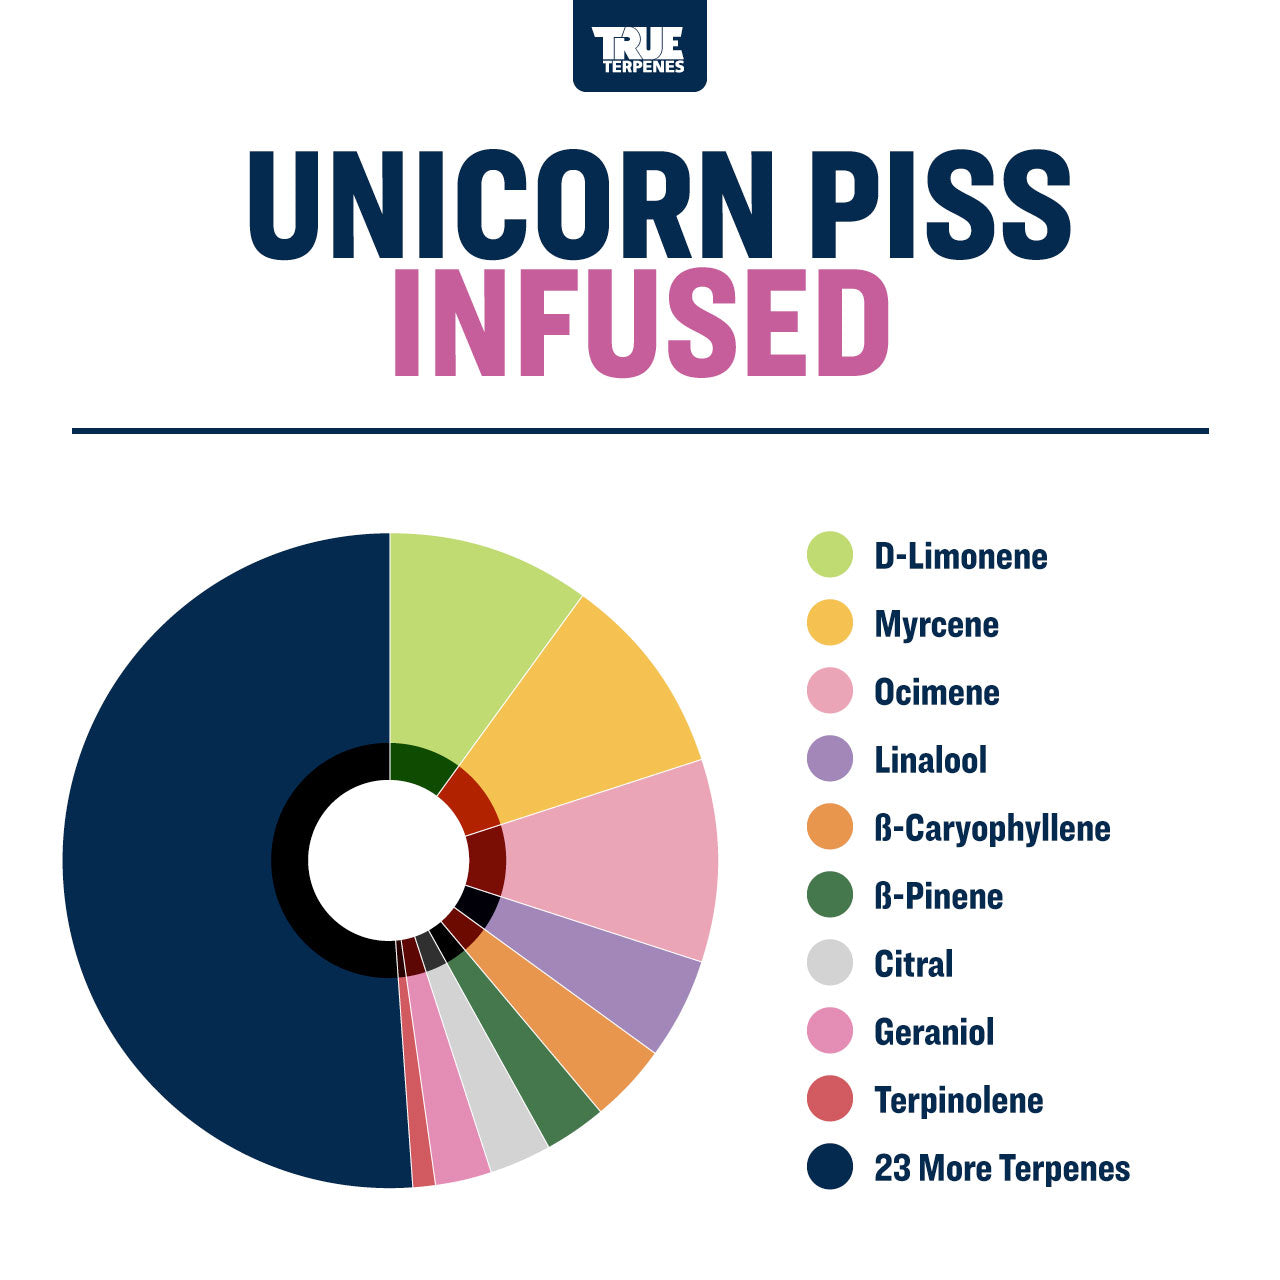 Unicorn Piss Profile - Infused